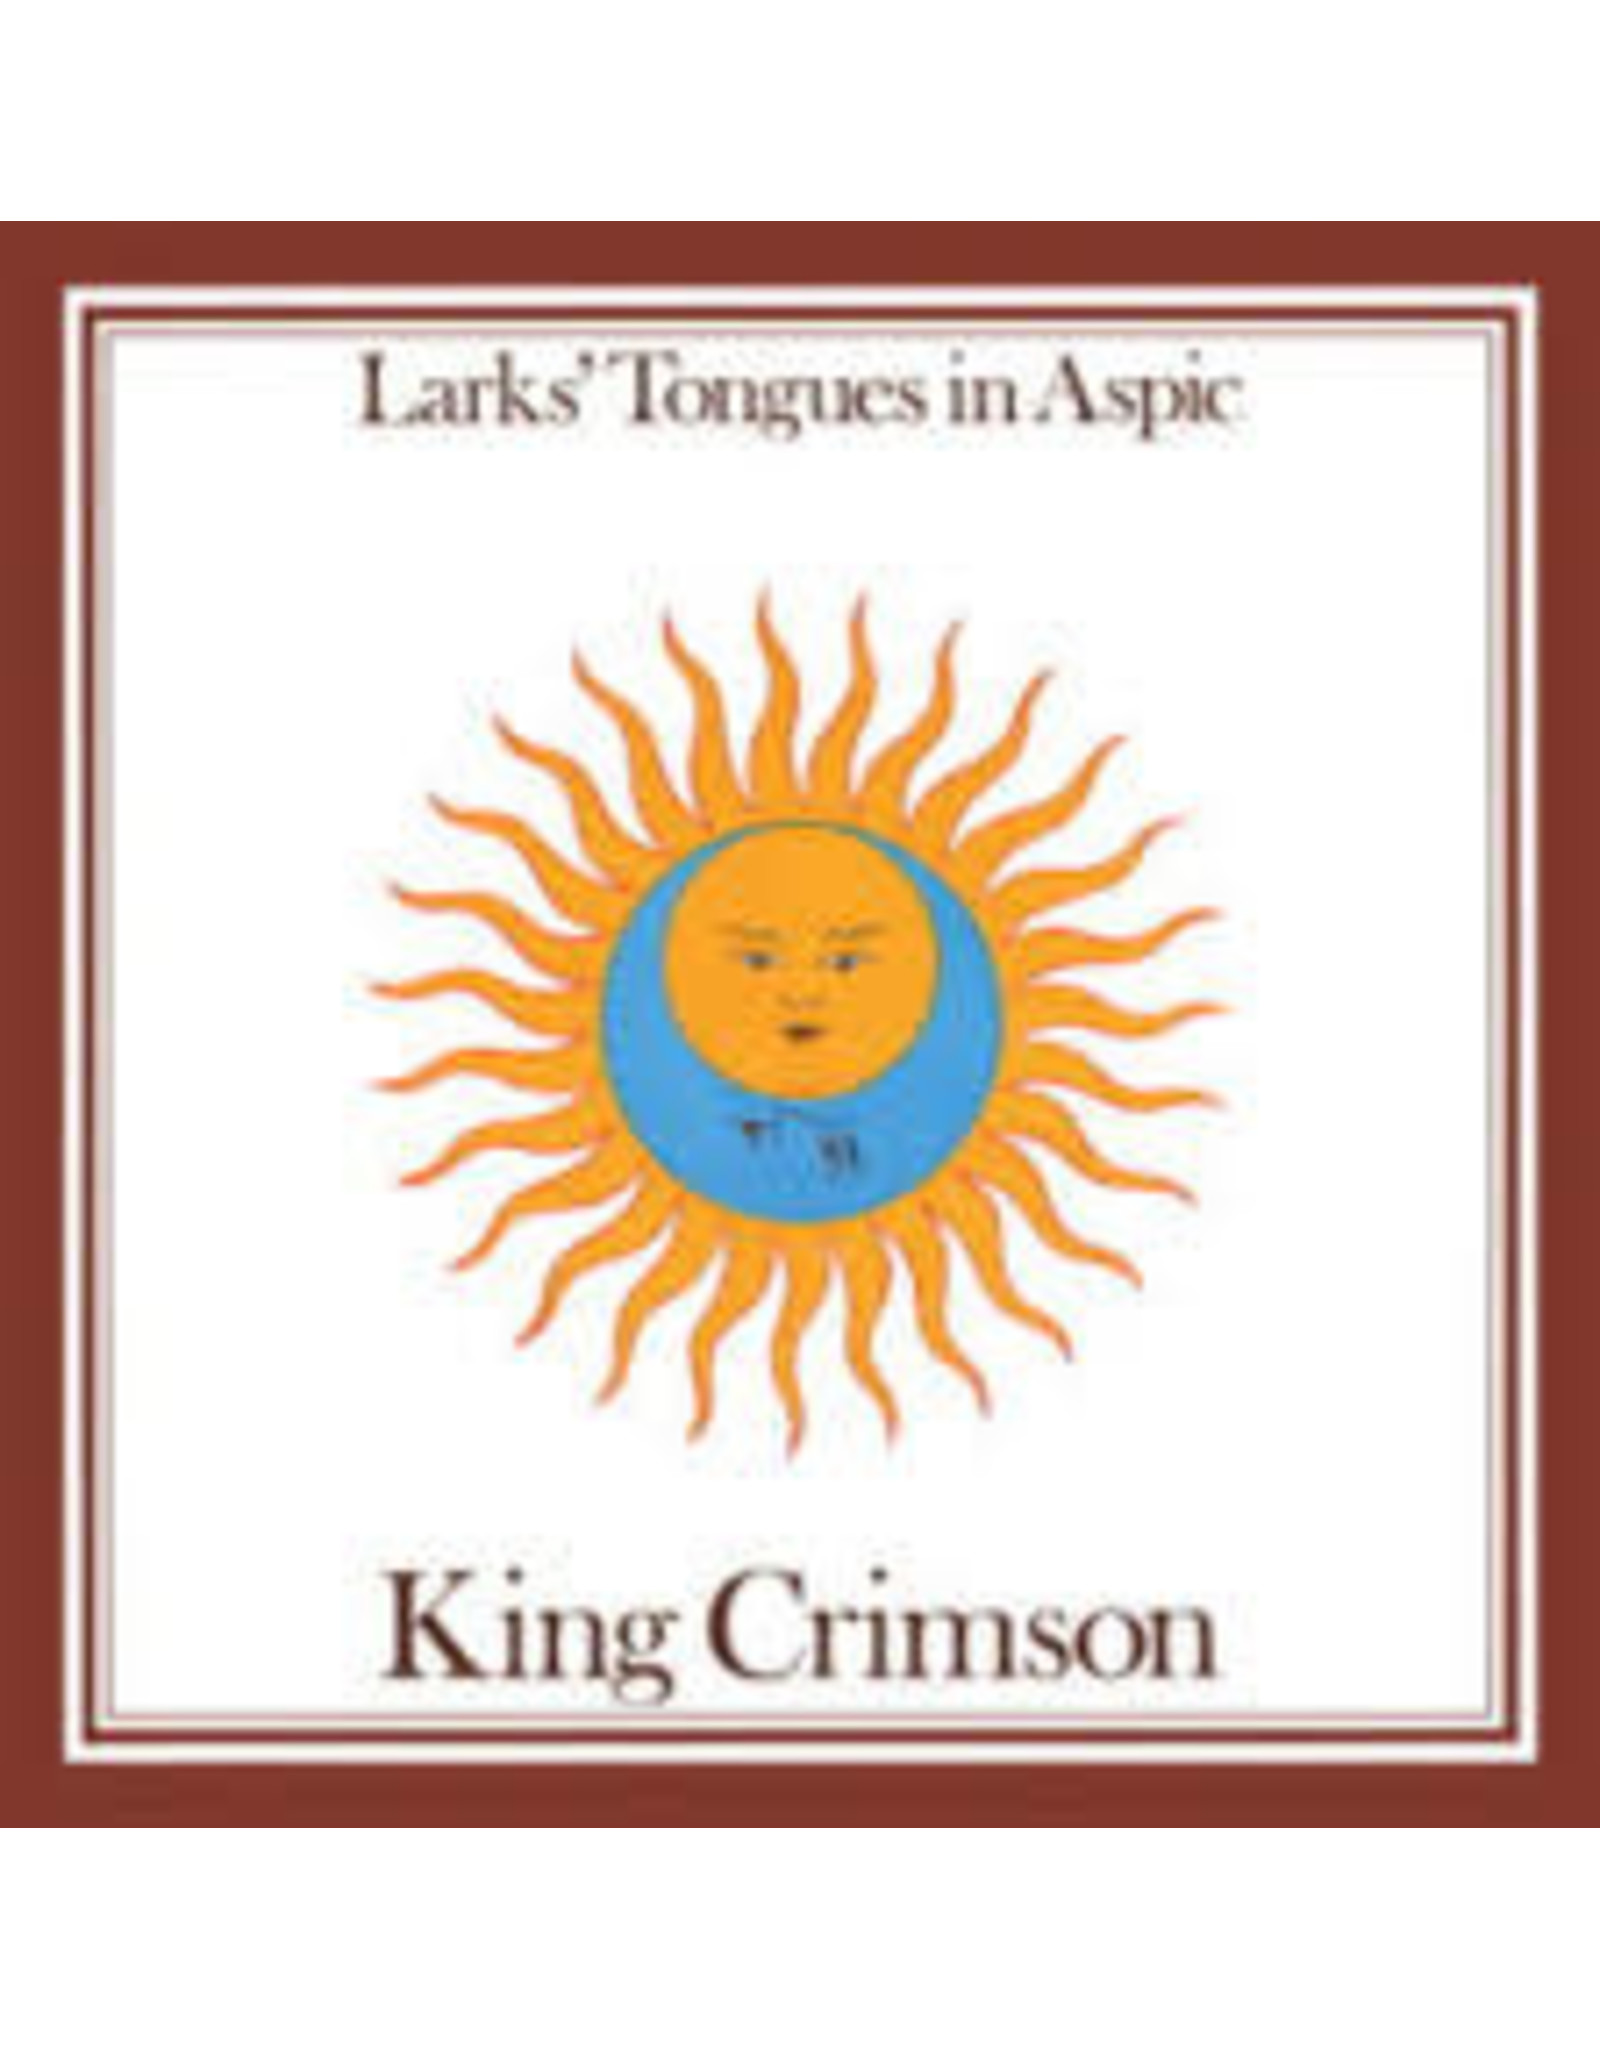 King Crimson - Larks' Tongues in Aspicc